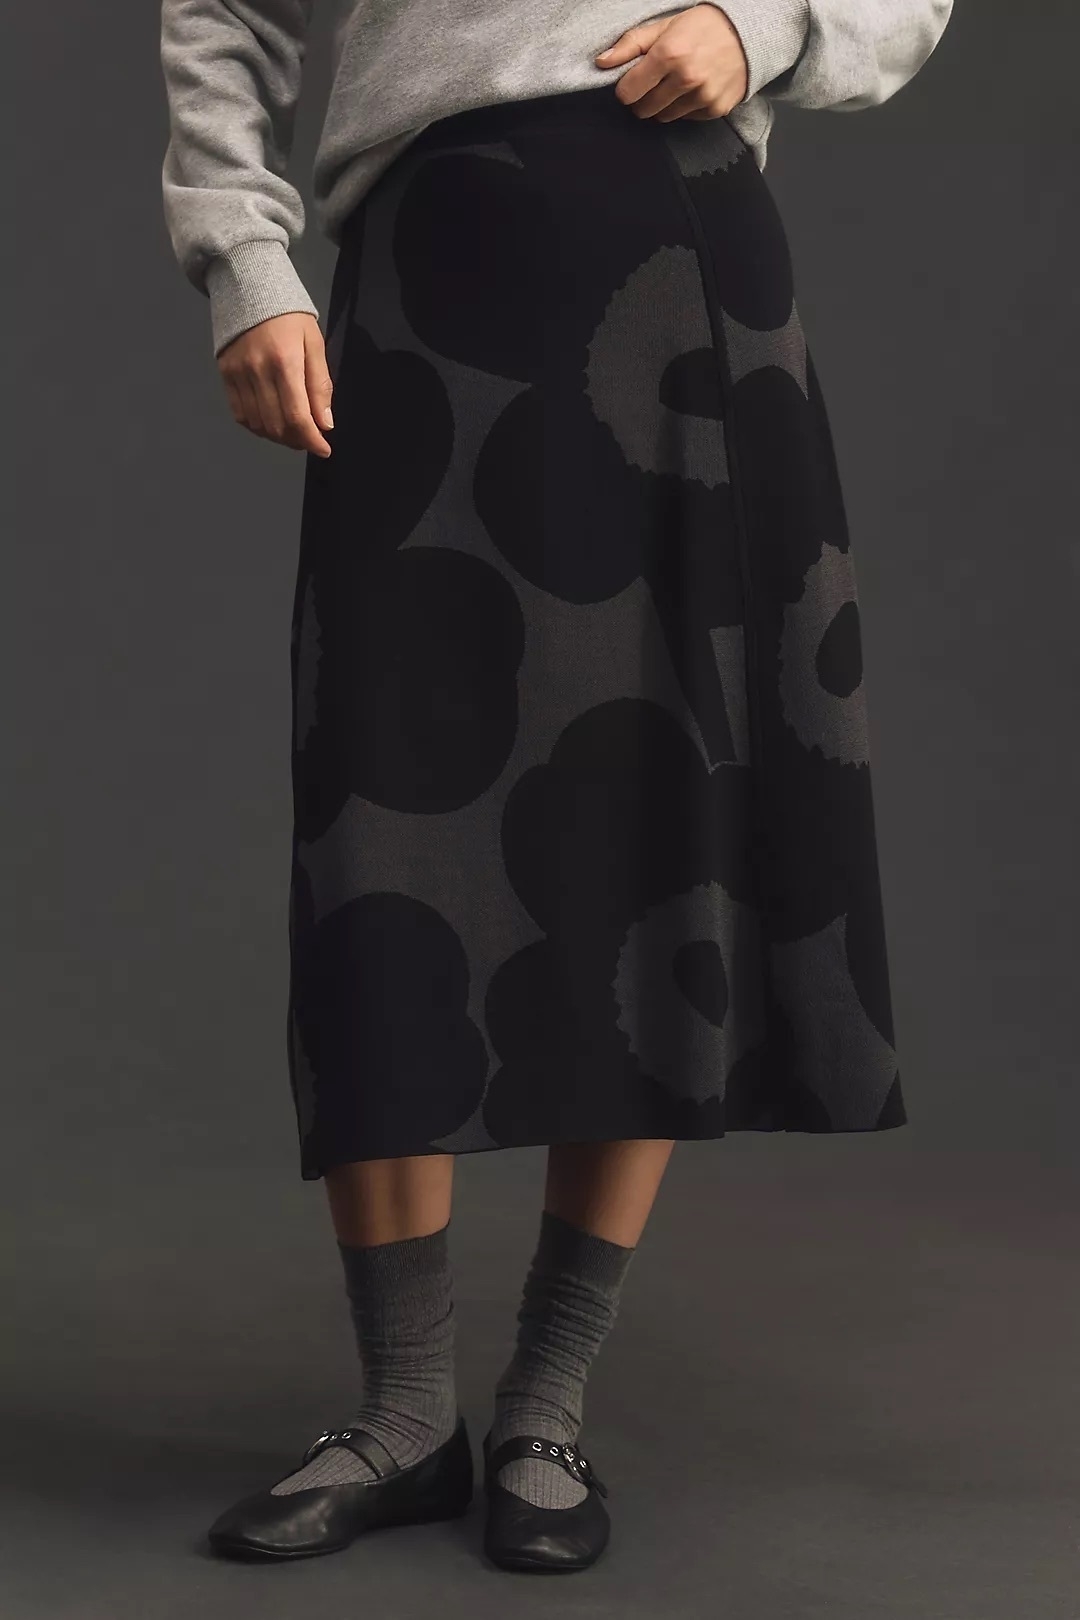 Black and gray Marimekko A line skirt on a model. 